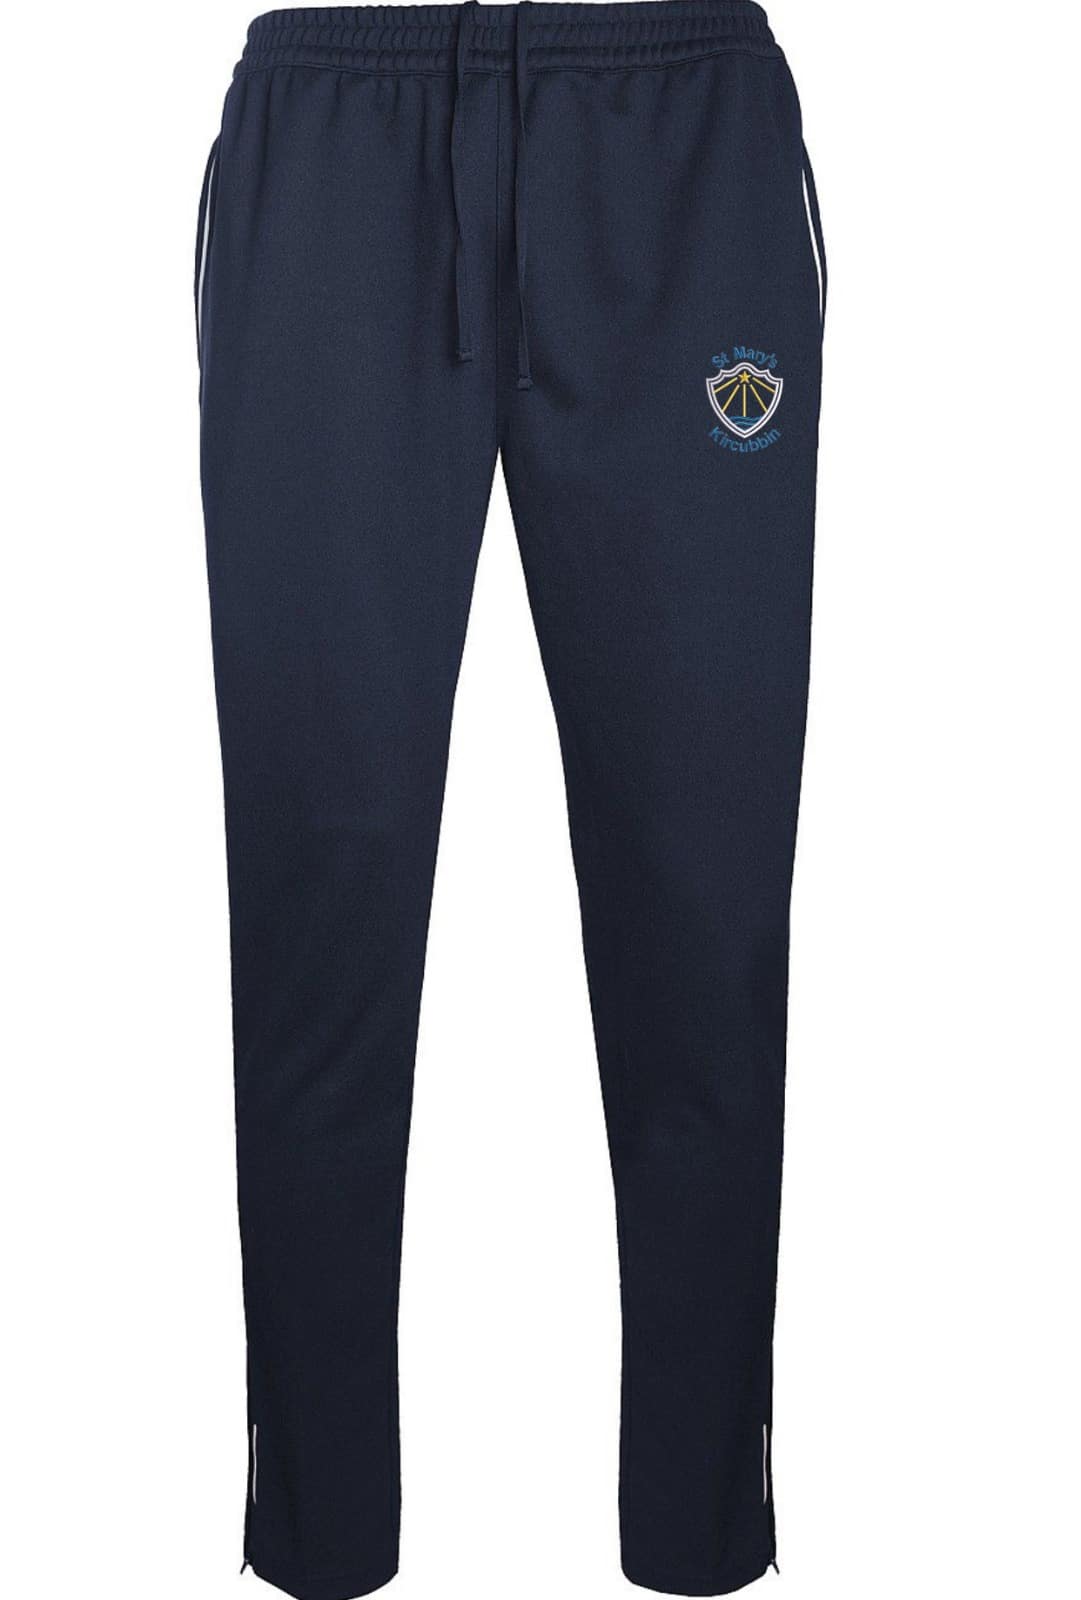 St. Mary’s Kircubbin Training Pants – Uniform Store NI